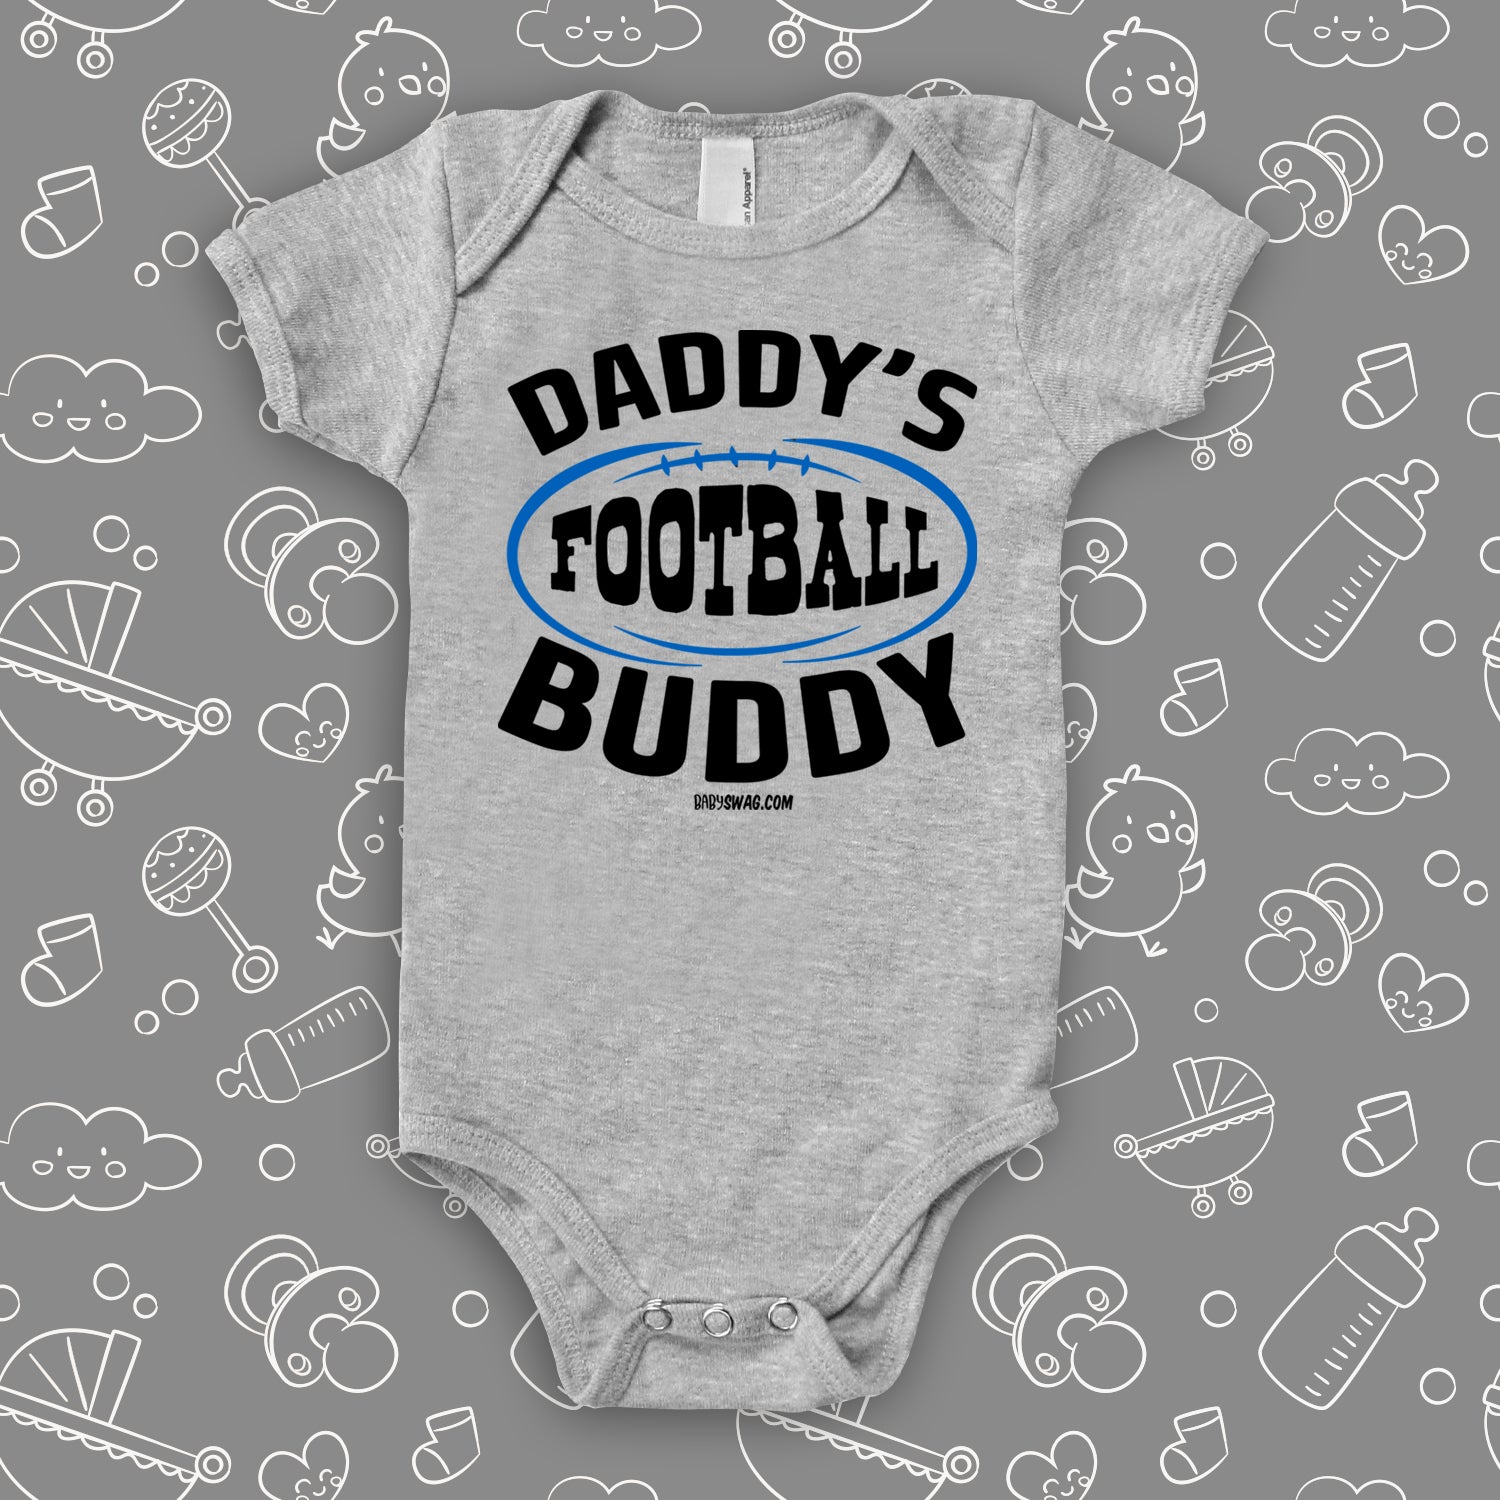 Cute baby boy onesies with saying "Daddy's Football Buddy" in grey. 